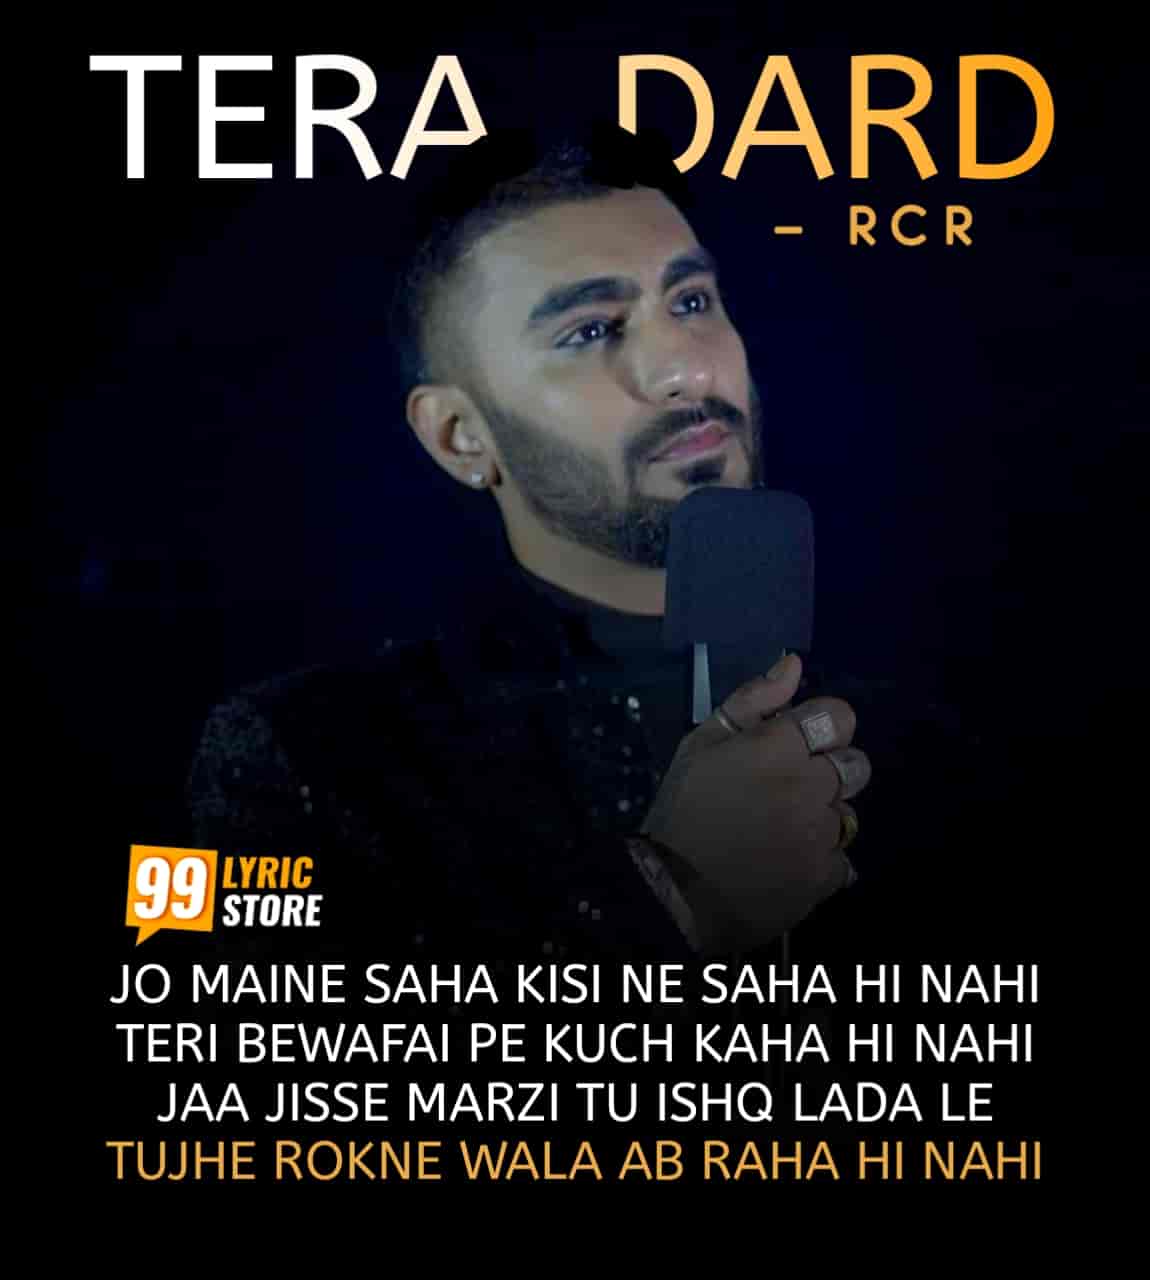 Tera Dard Sad Rap Song Image Features Rcr